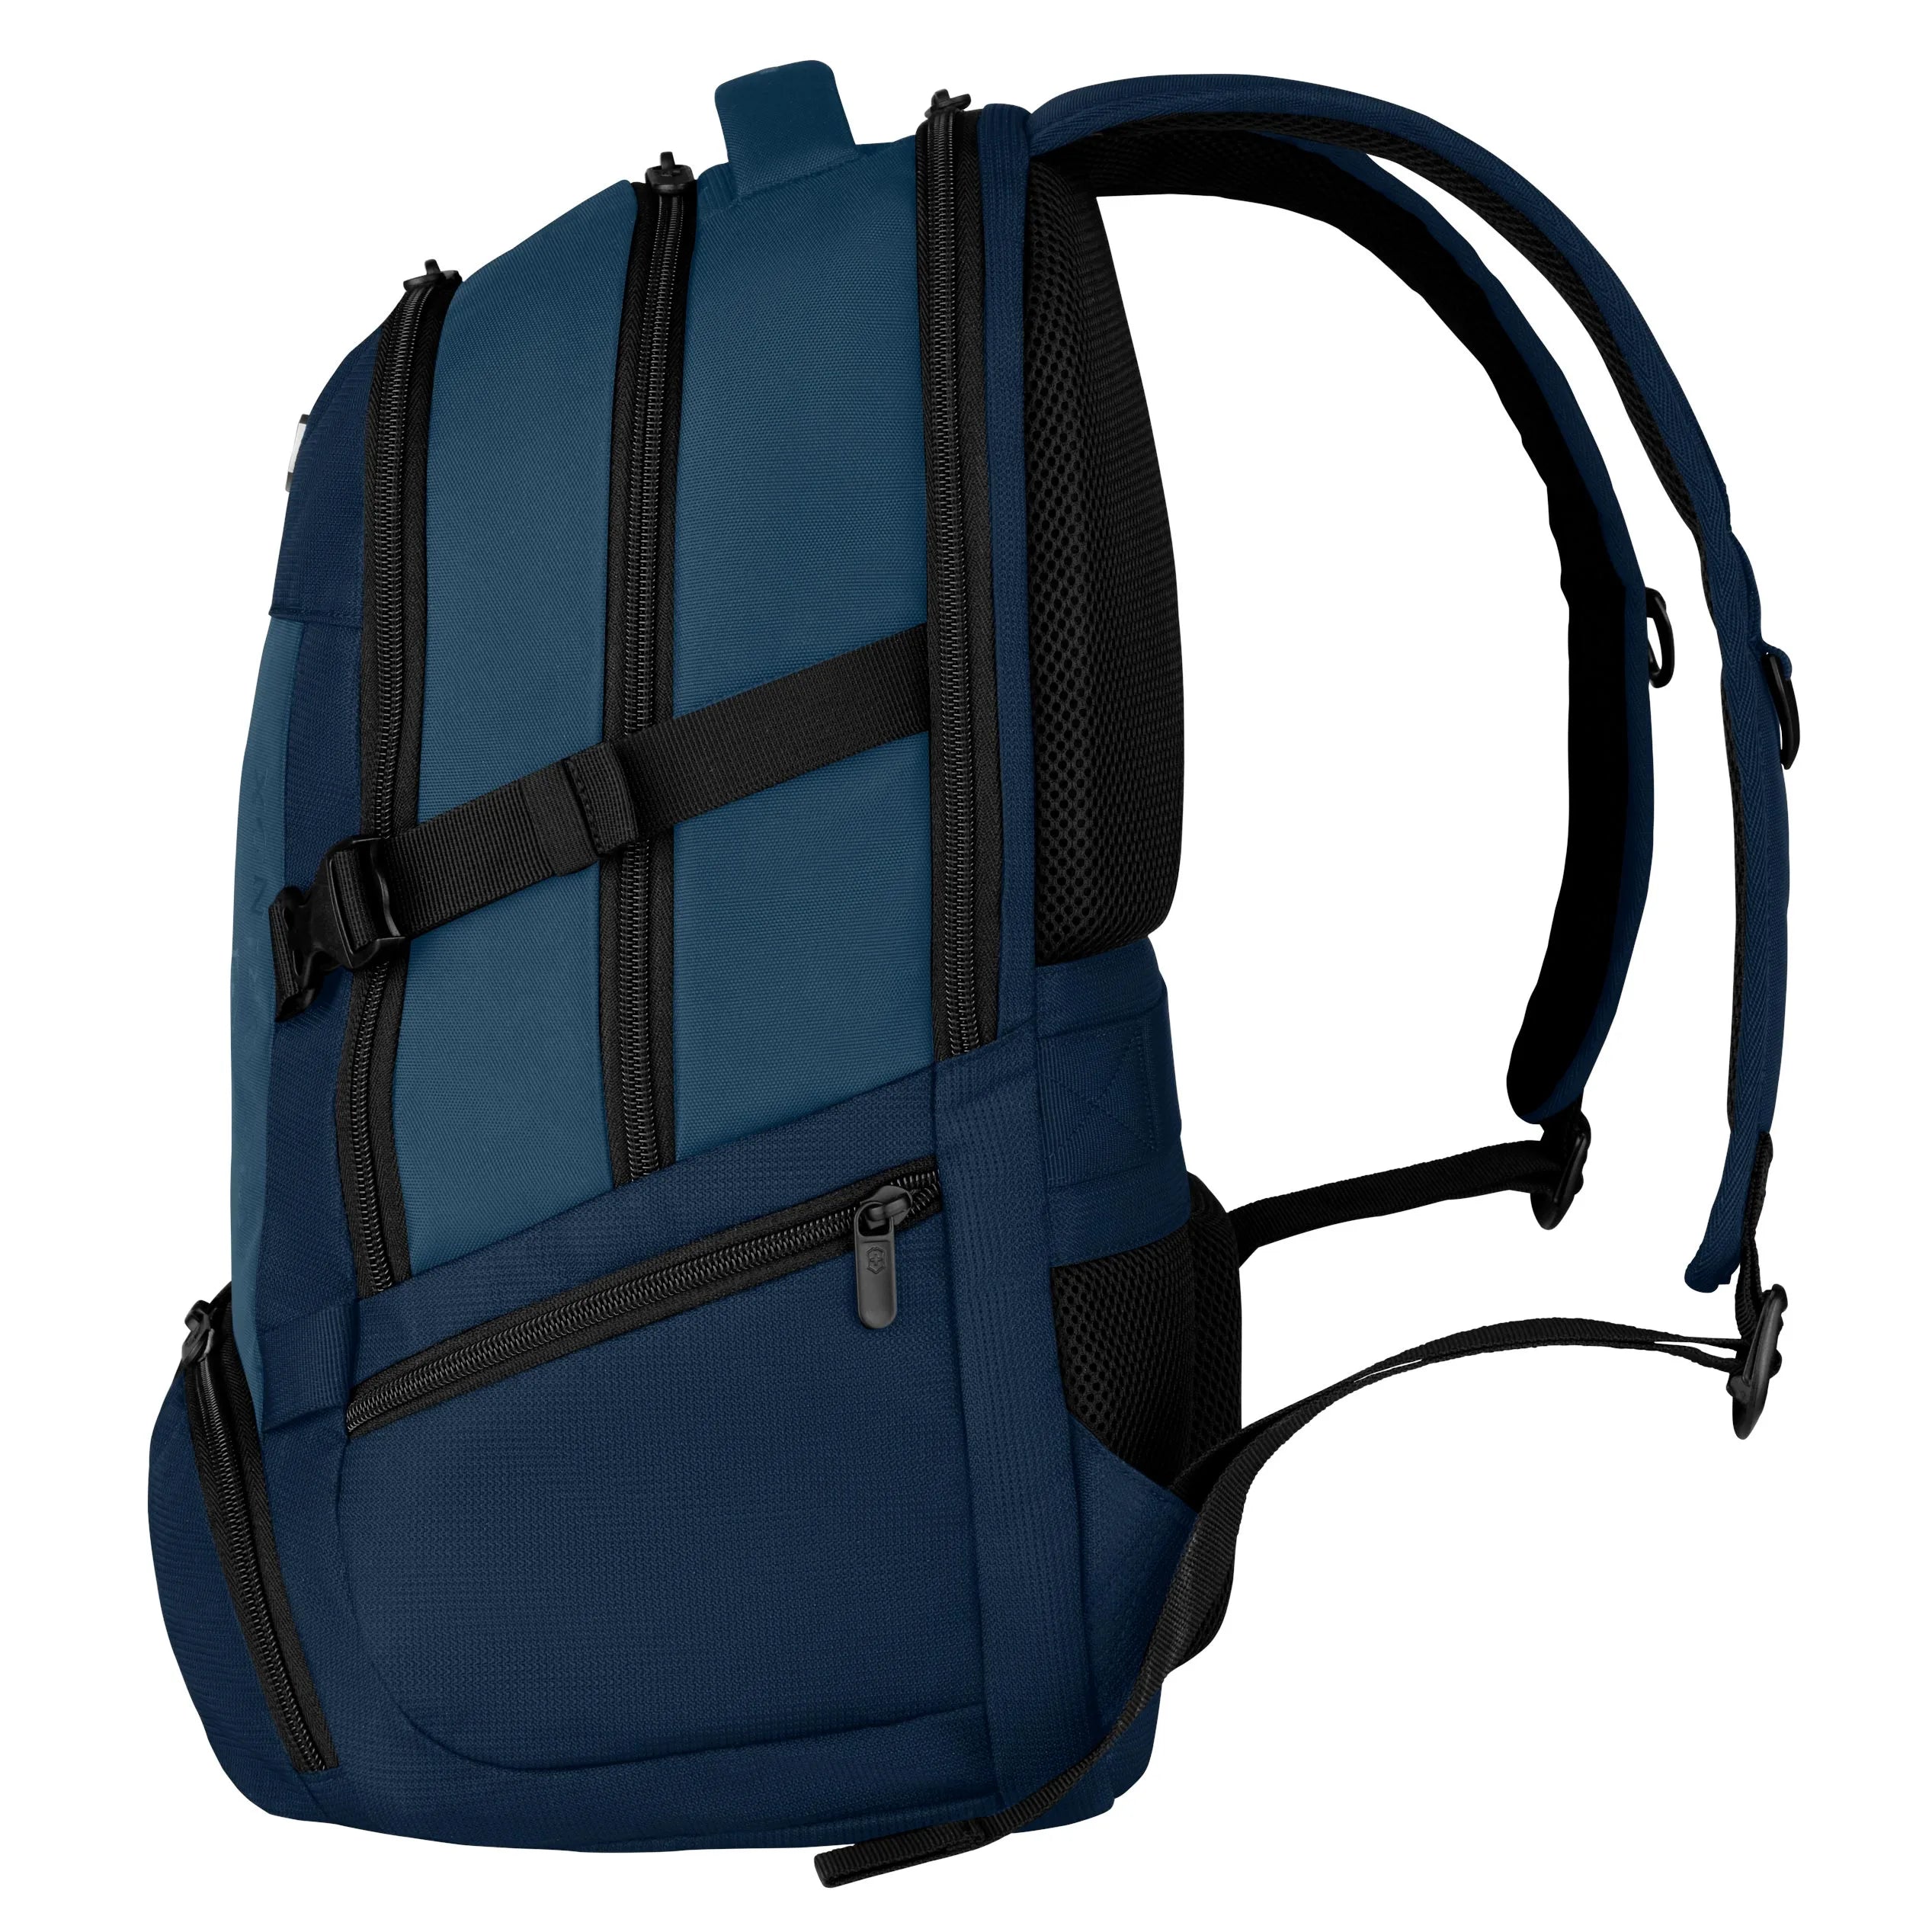 Victorinox VX Sport Evo Deluxe Backpack 48 cm - Black